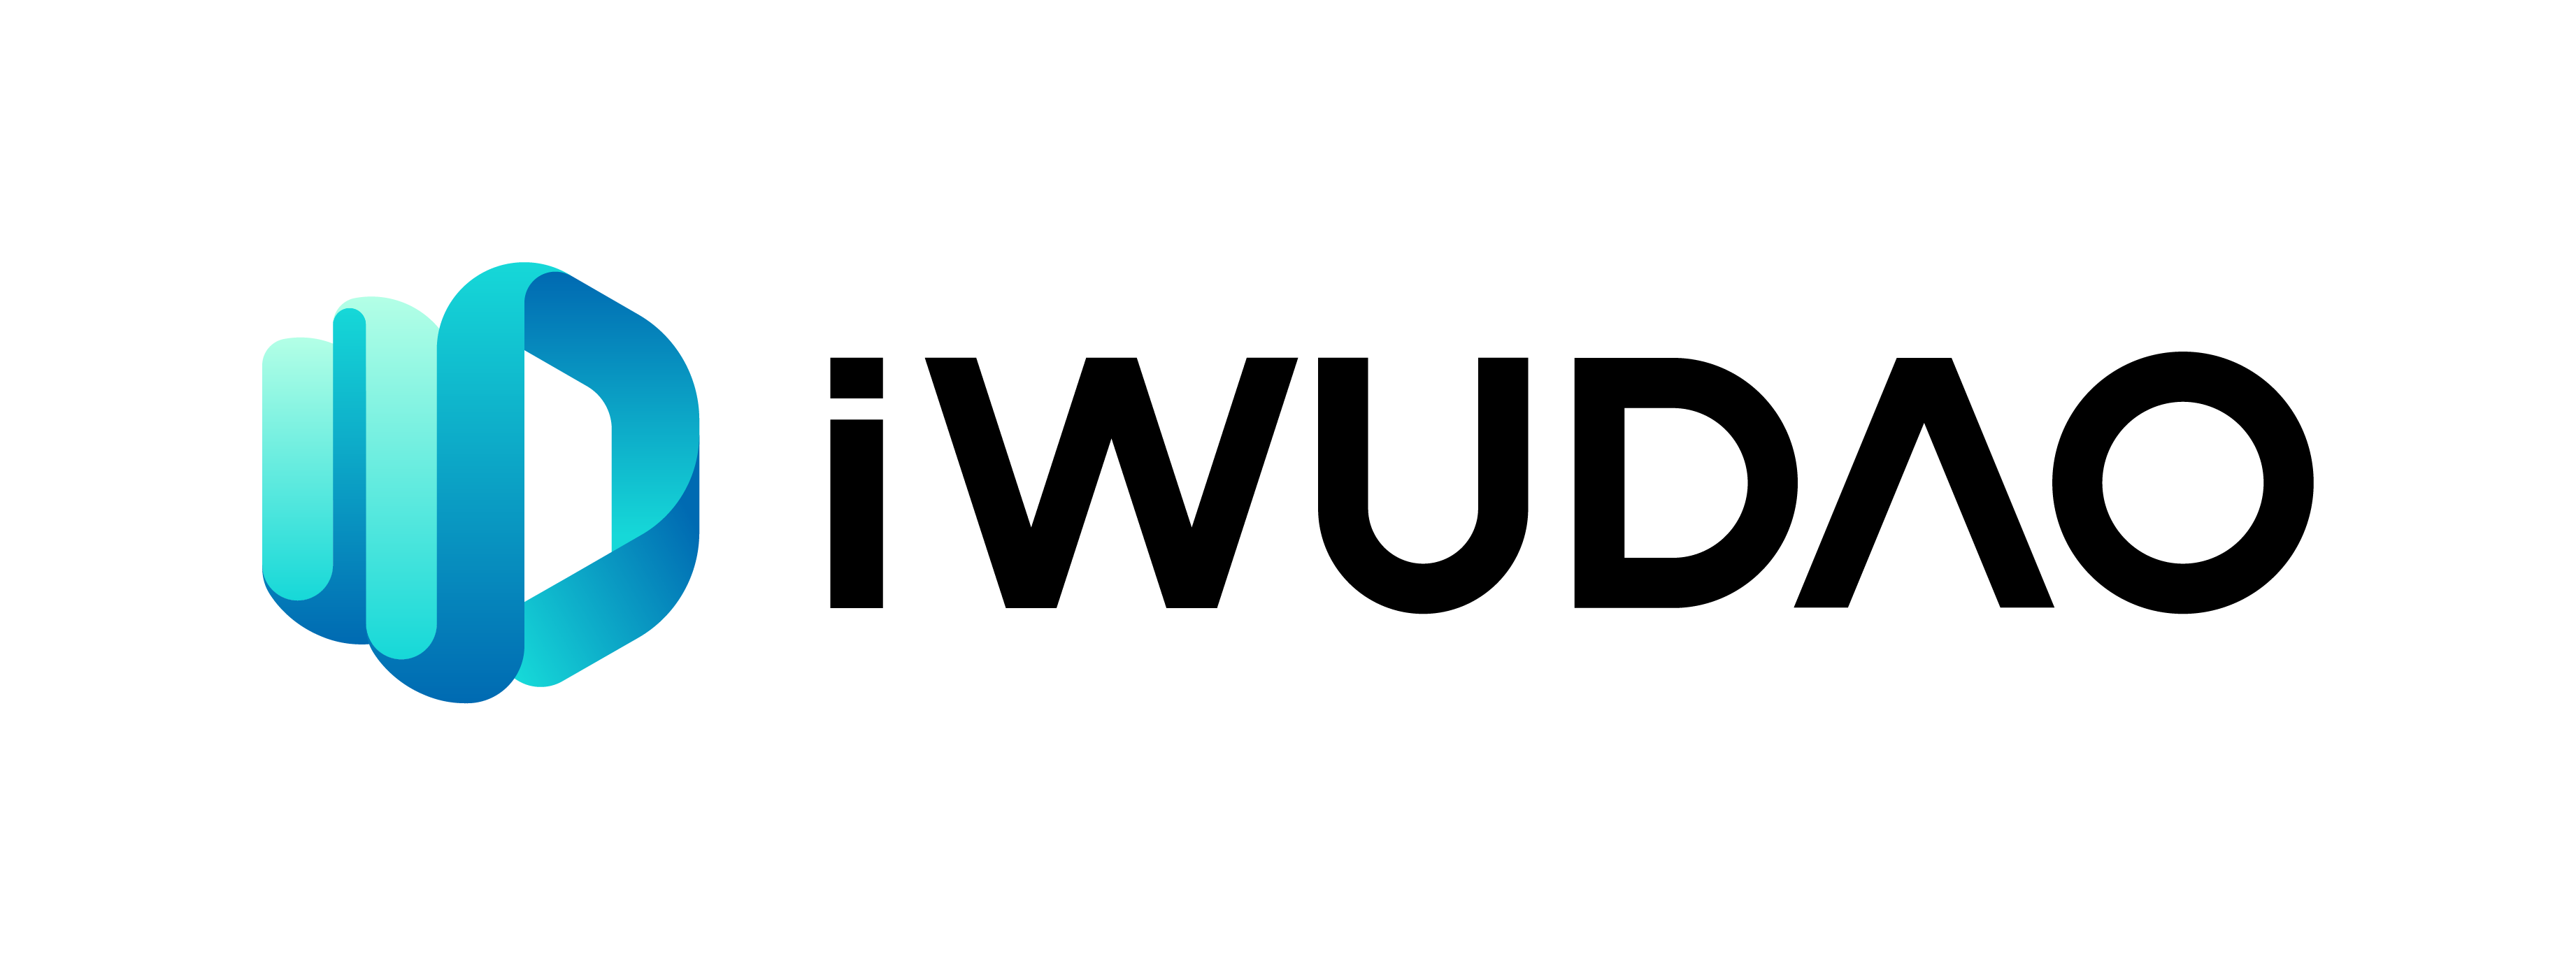 iWUDAO logo-英文-横版.png